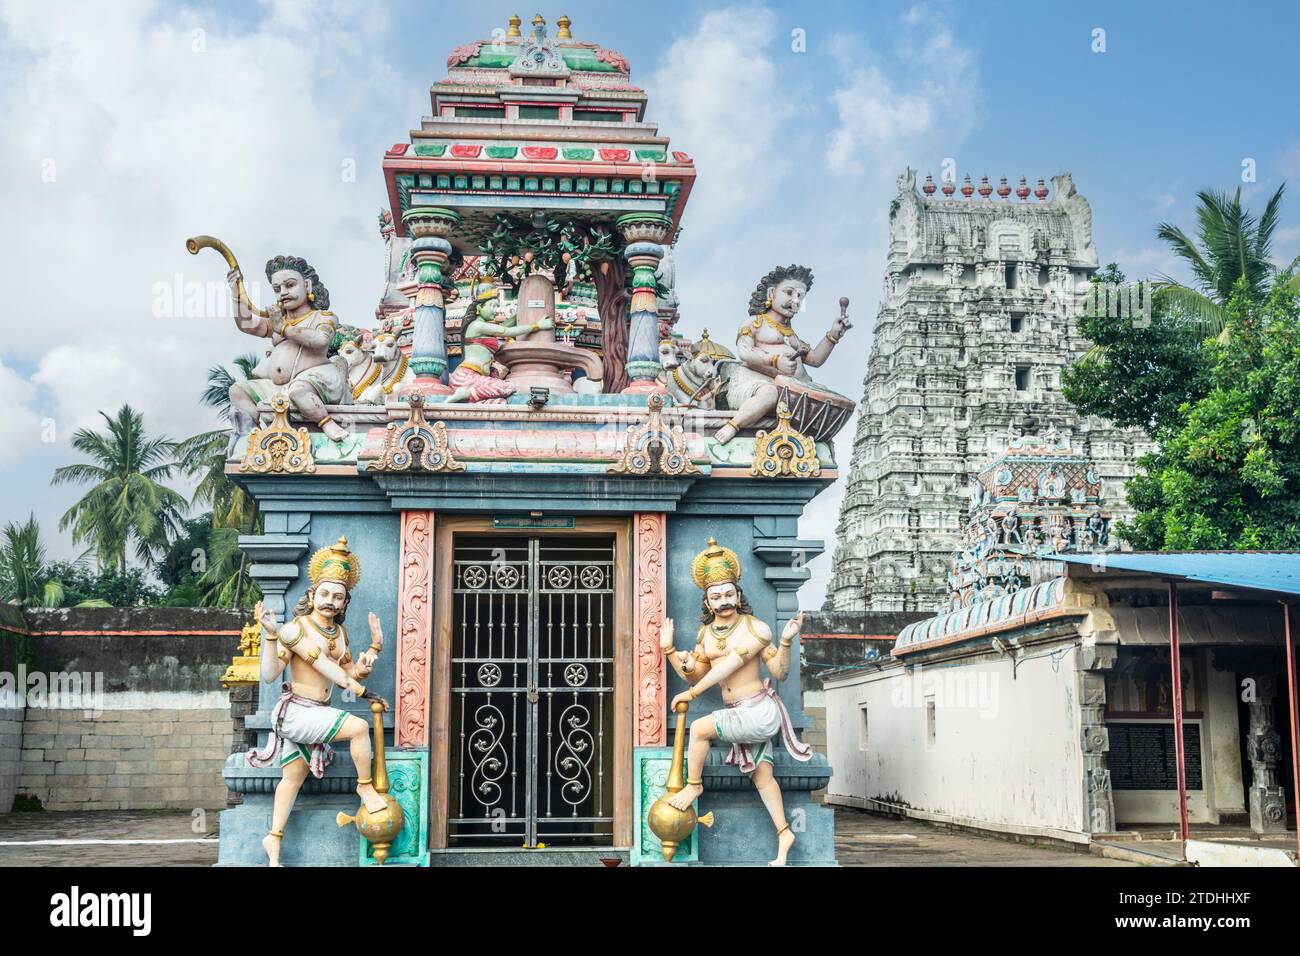 Colorful Vedagiriswarar Temple 0f Shiva deity, Thirukazhukundram, Tondaimandalam region, Tamil Nadu, South India Stock Photo